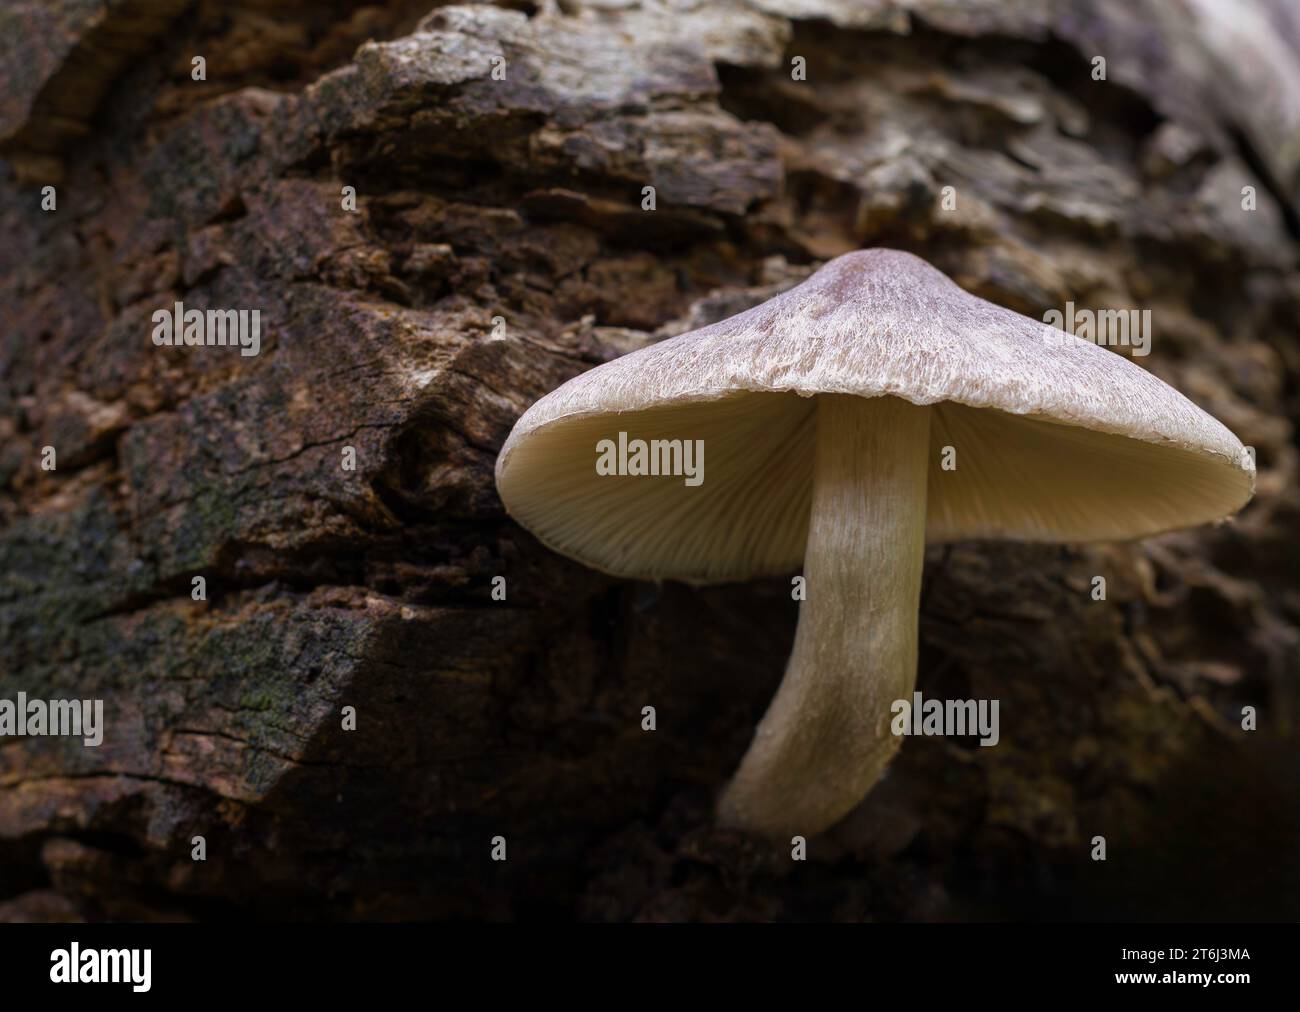 Common Stump Brittlestem Mushroom on tree stump Stock Photo